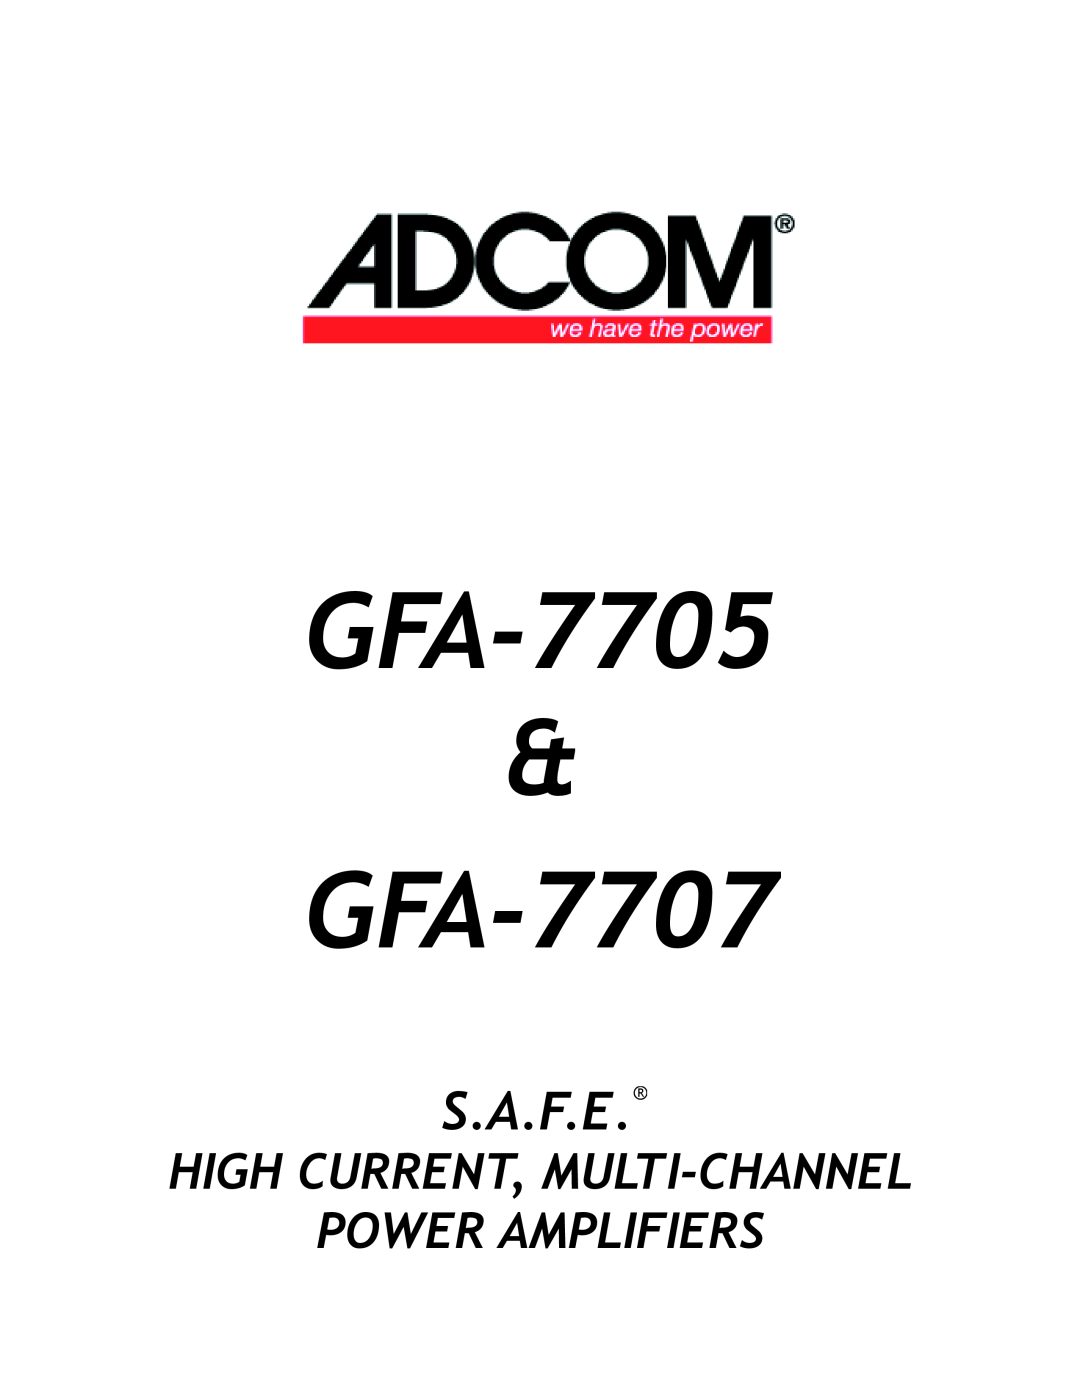 Adcom GFA7707 manual GFA-7705 & GFA-7707, S.A.F.E, High Current, Multi-Channel Power Amplifiers 